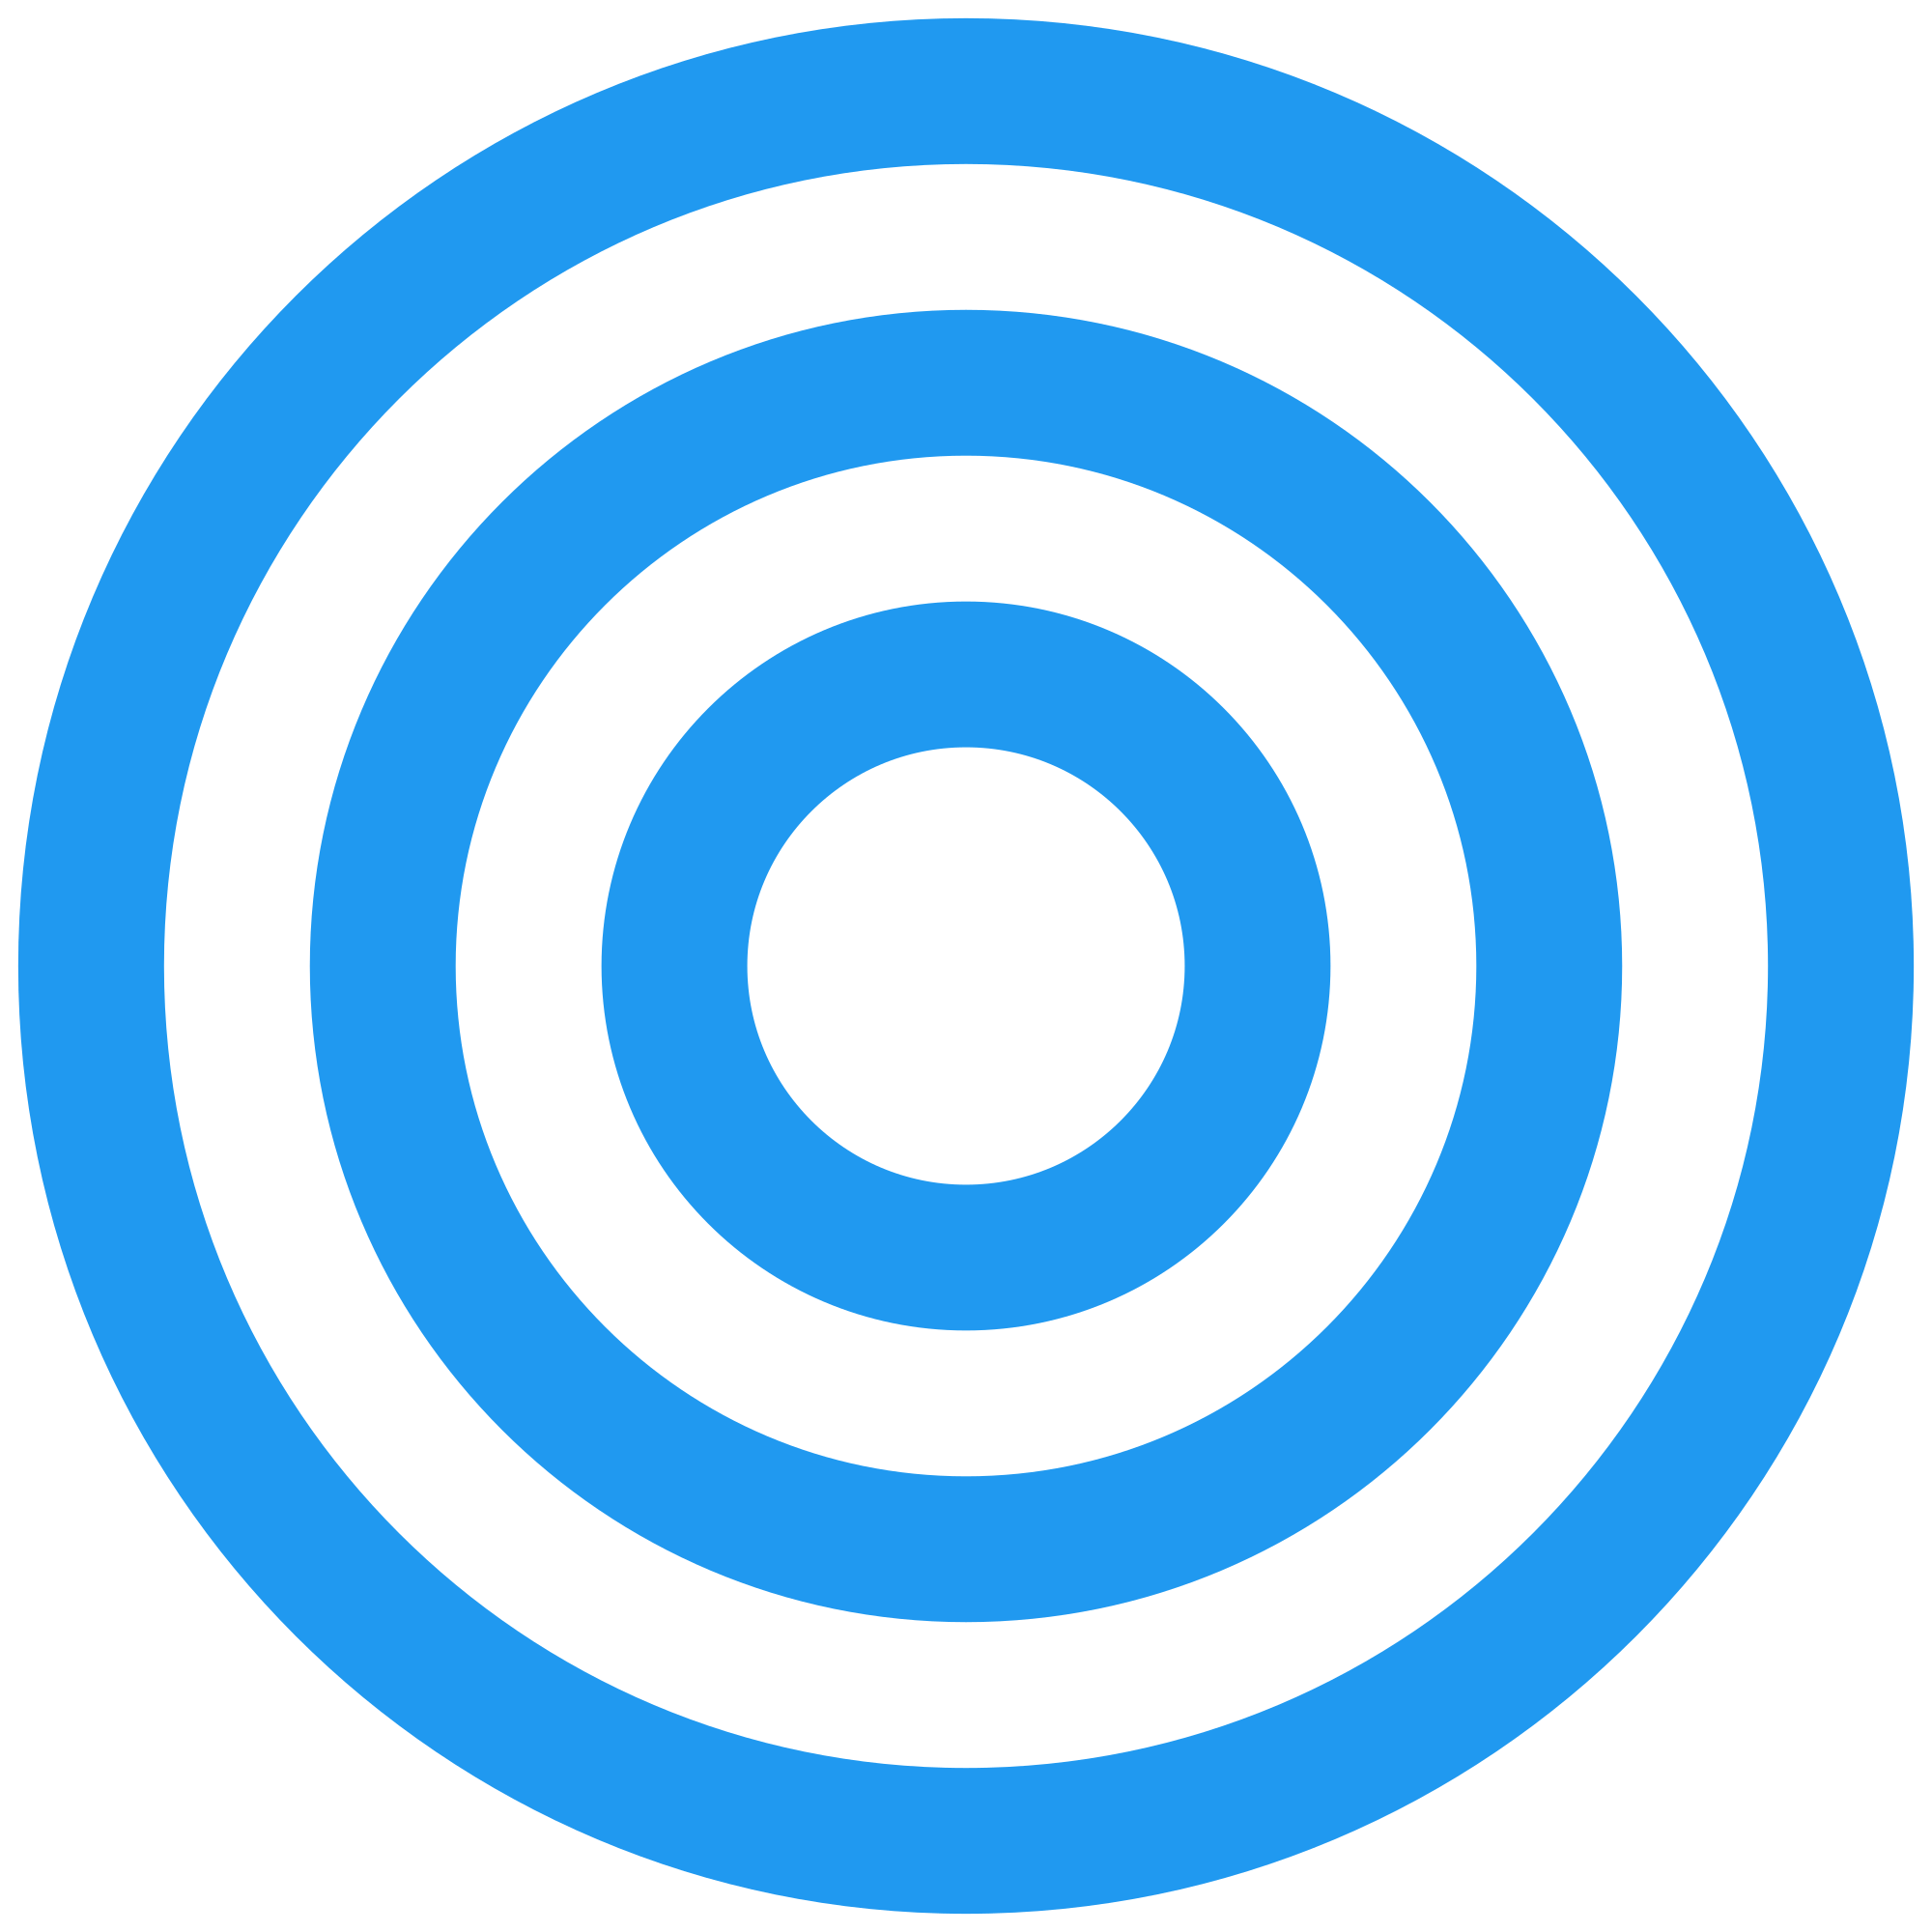 Blue with White Circle Logo - Urantia Three Concentric Blue Circles On White Symbol.svg